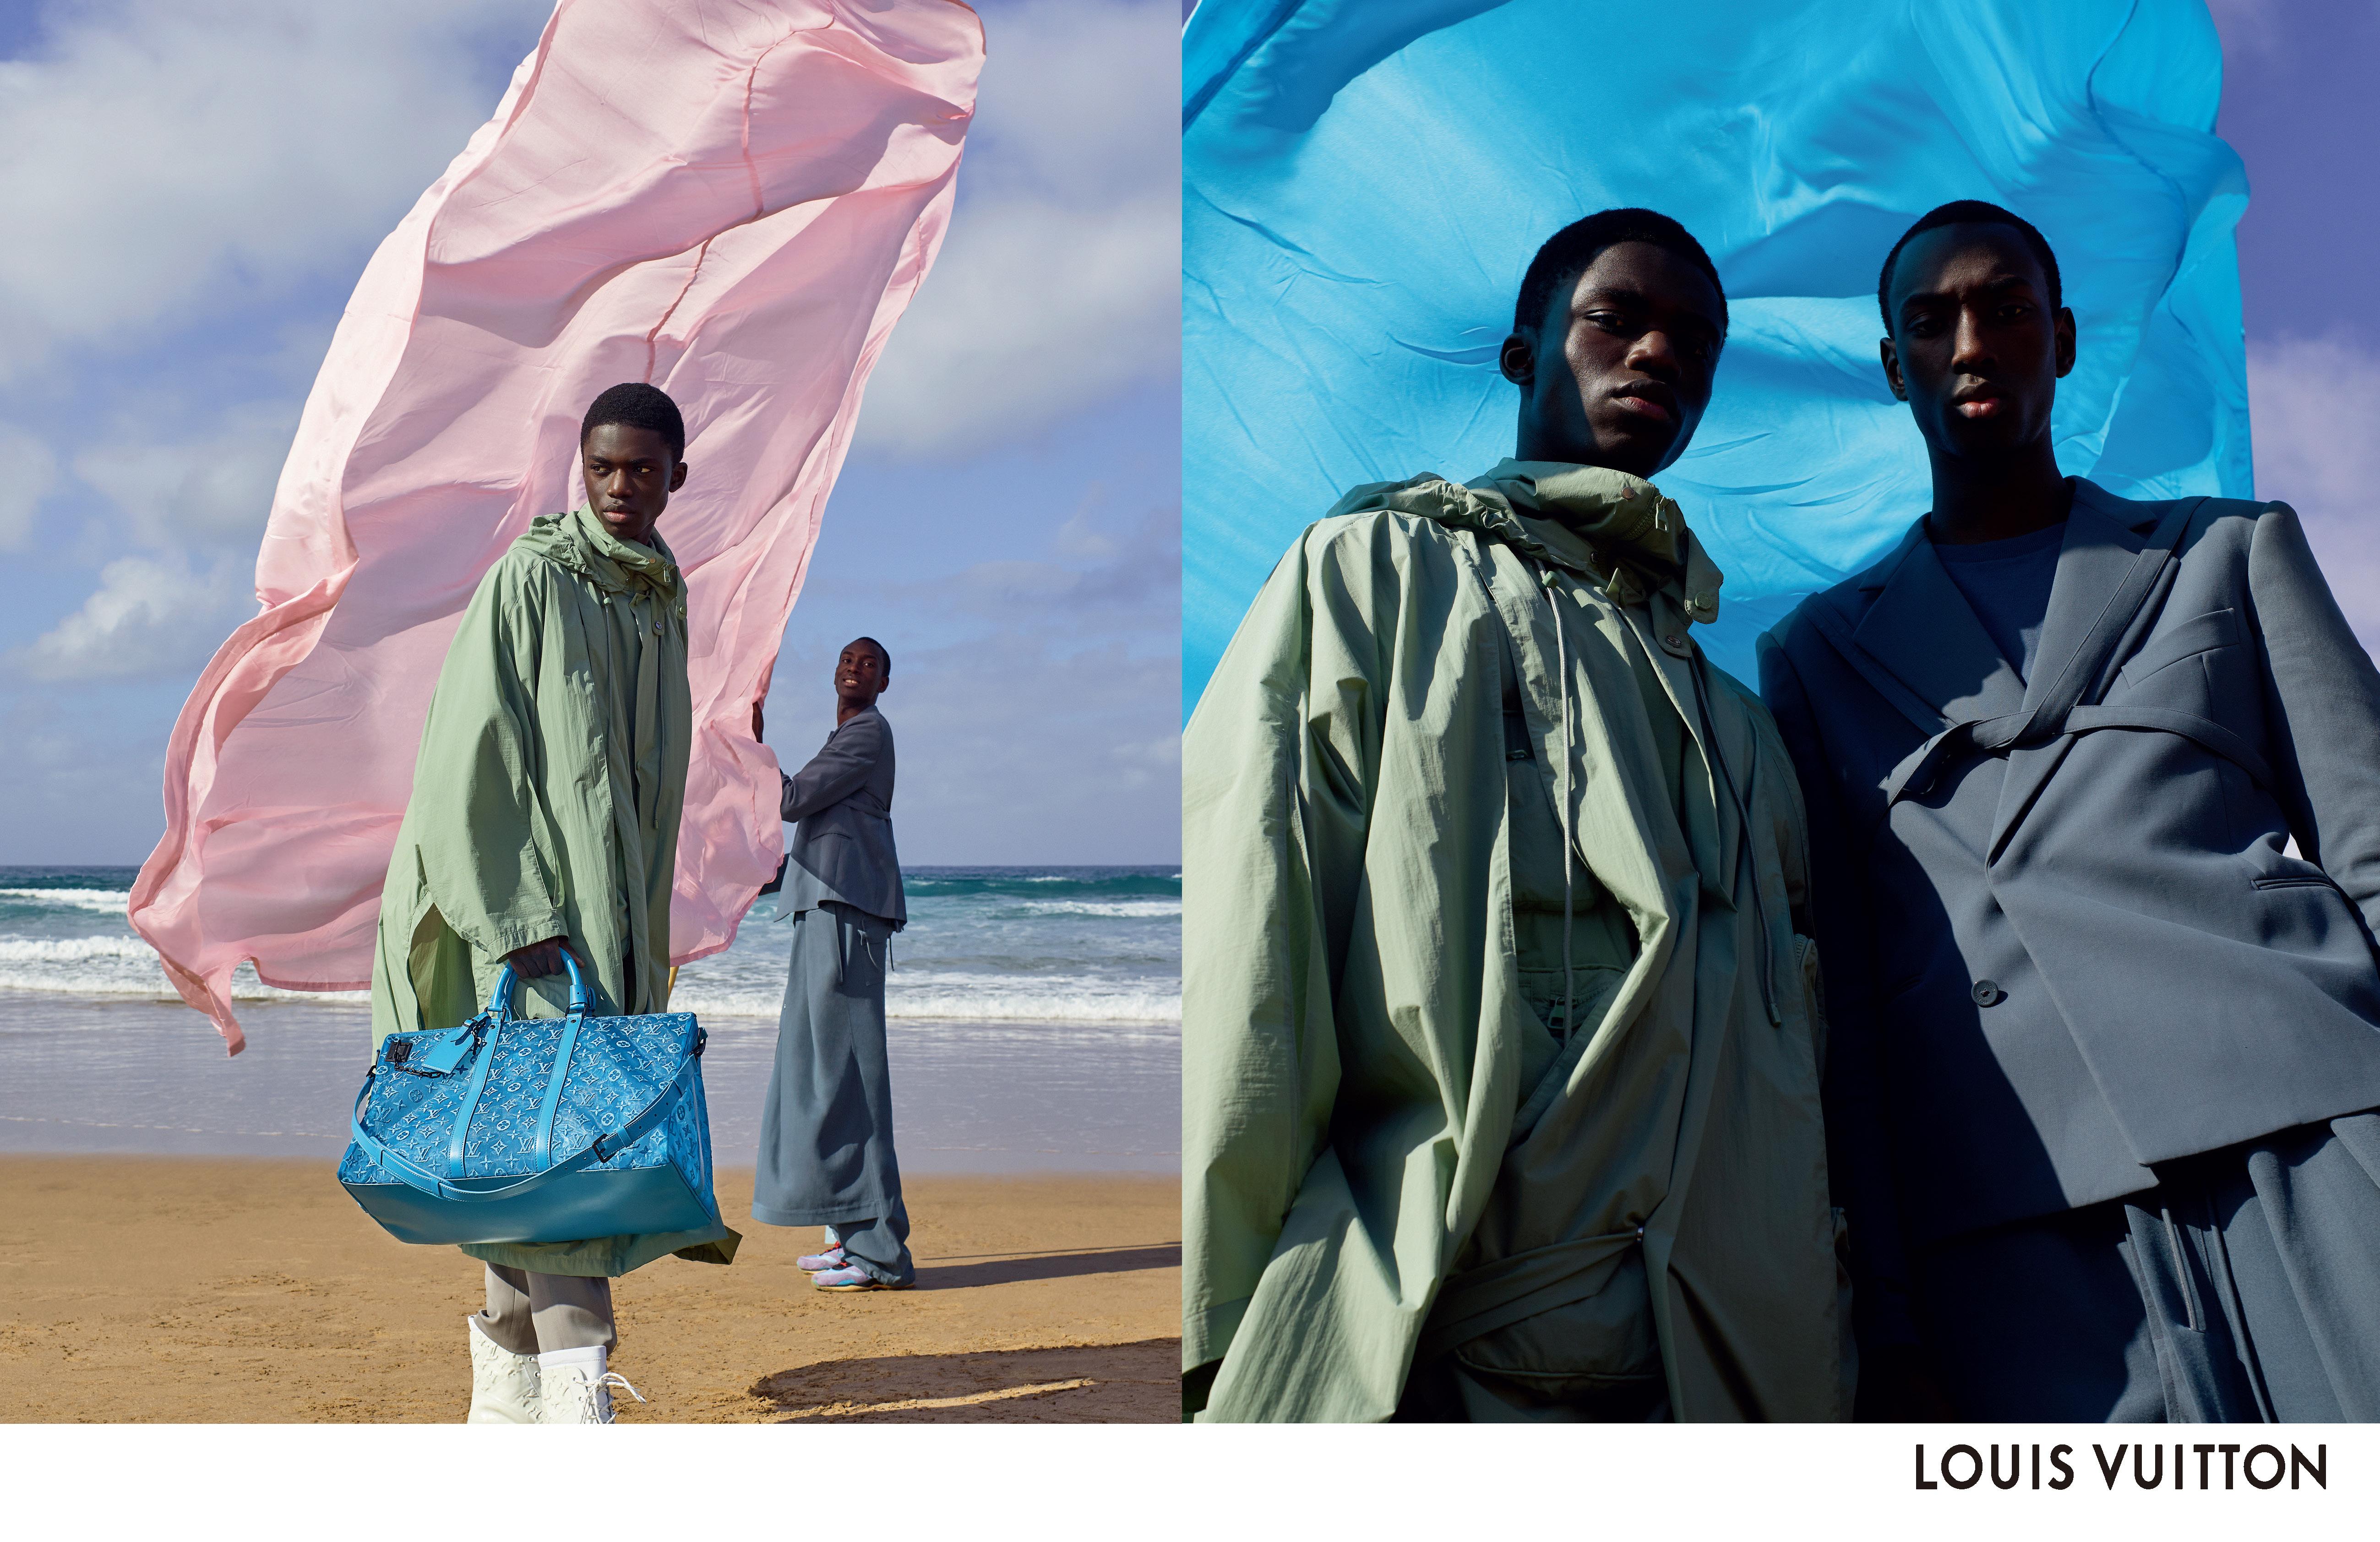 Louis Vuitton - Towards a Dream – Viviane Sassen - We Folk